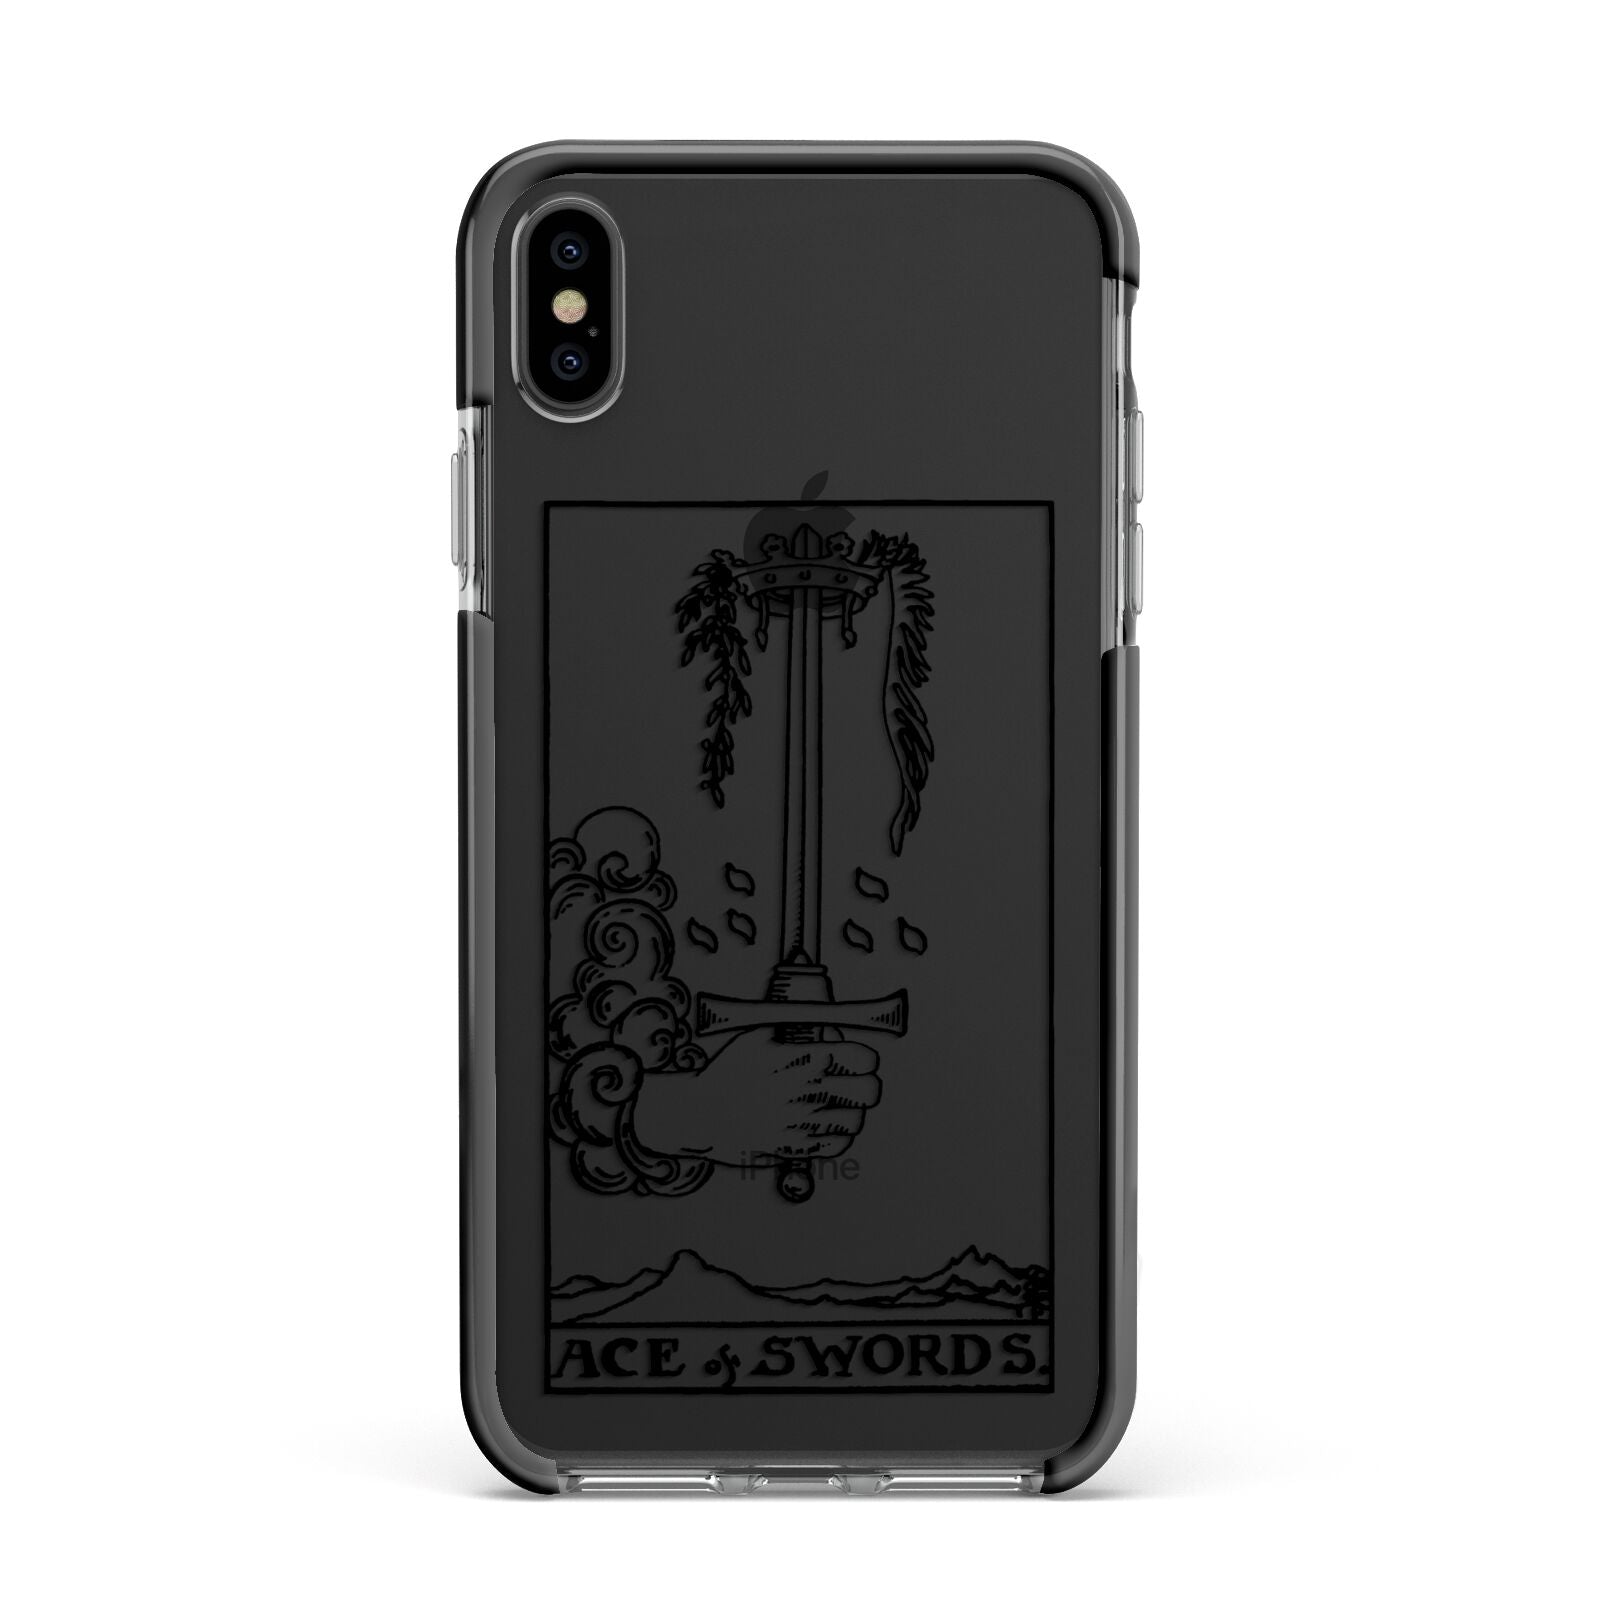 Ace of Swords Monochrome Apple iPhone Xs Max Impact Case Black Edge on Black Phone